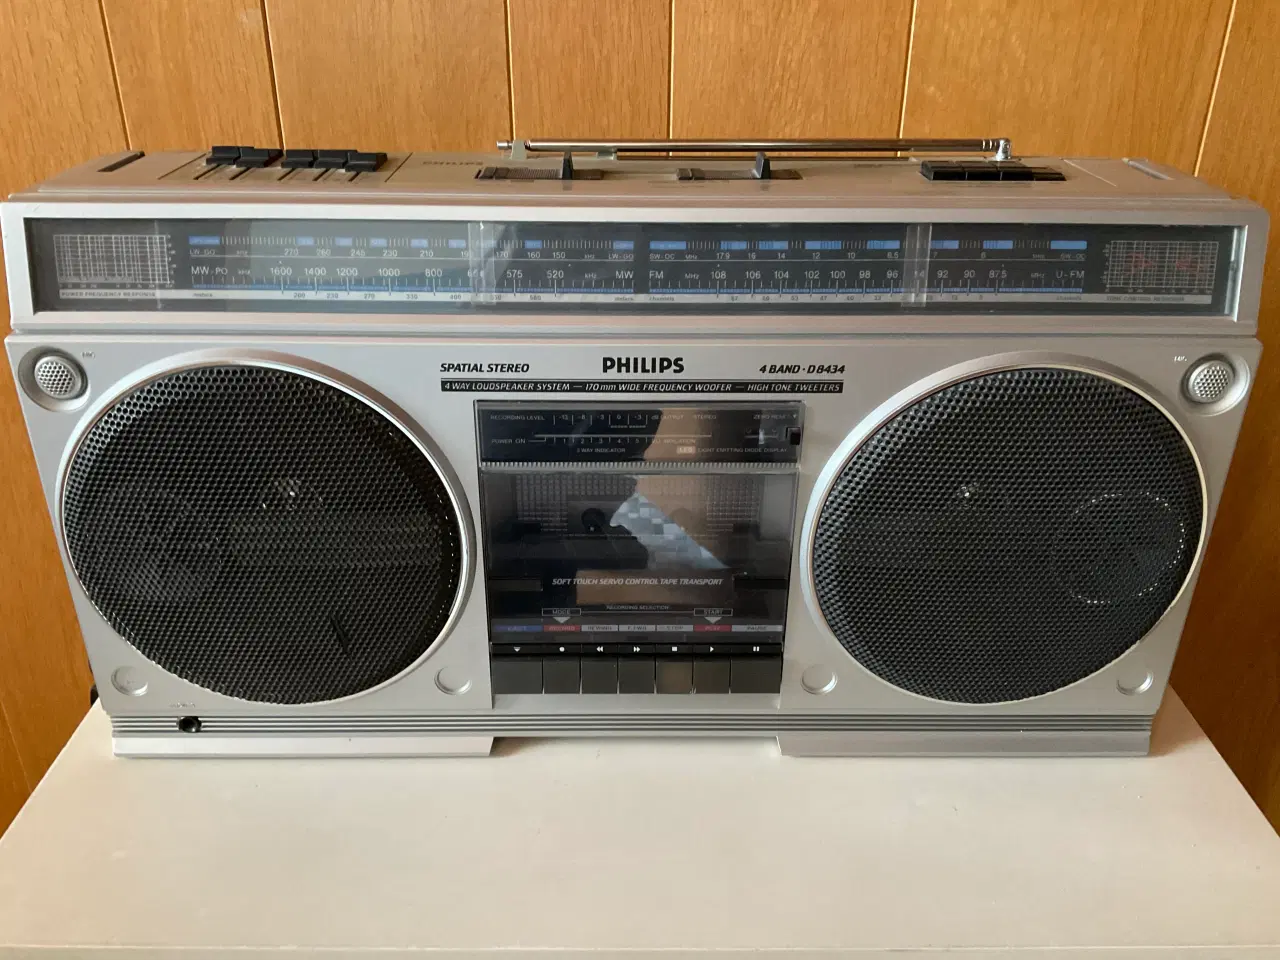 Billede 2 - Ghettoplaster Philips D8434 radio rekorder